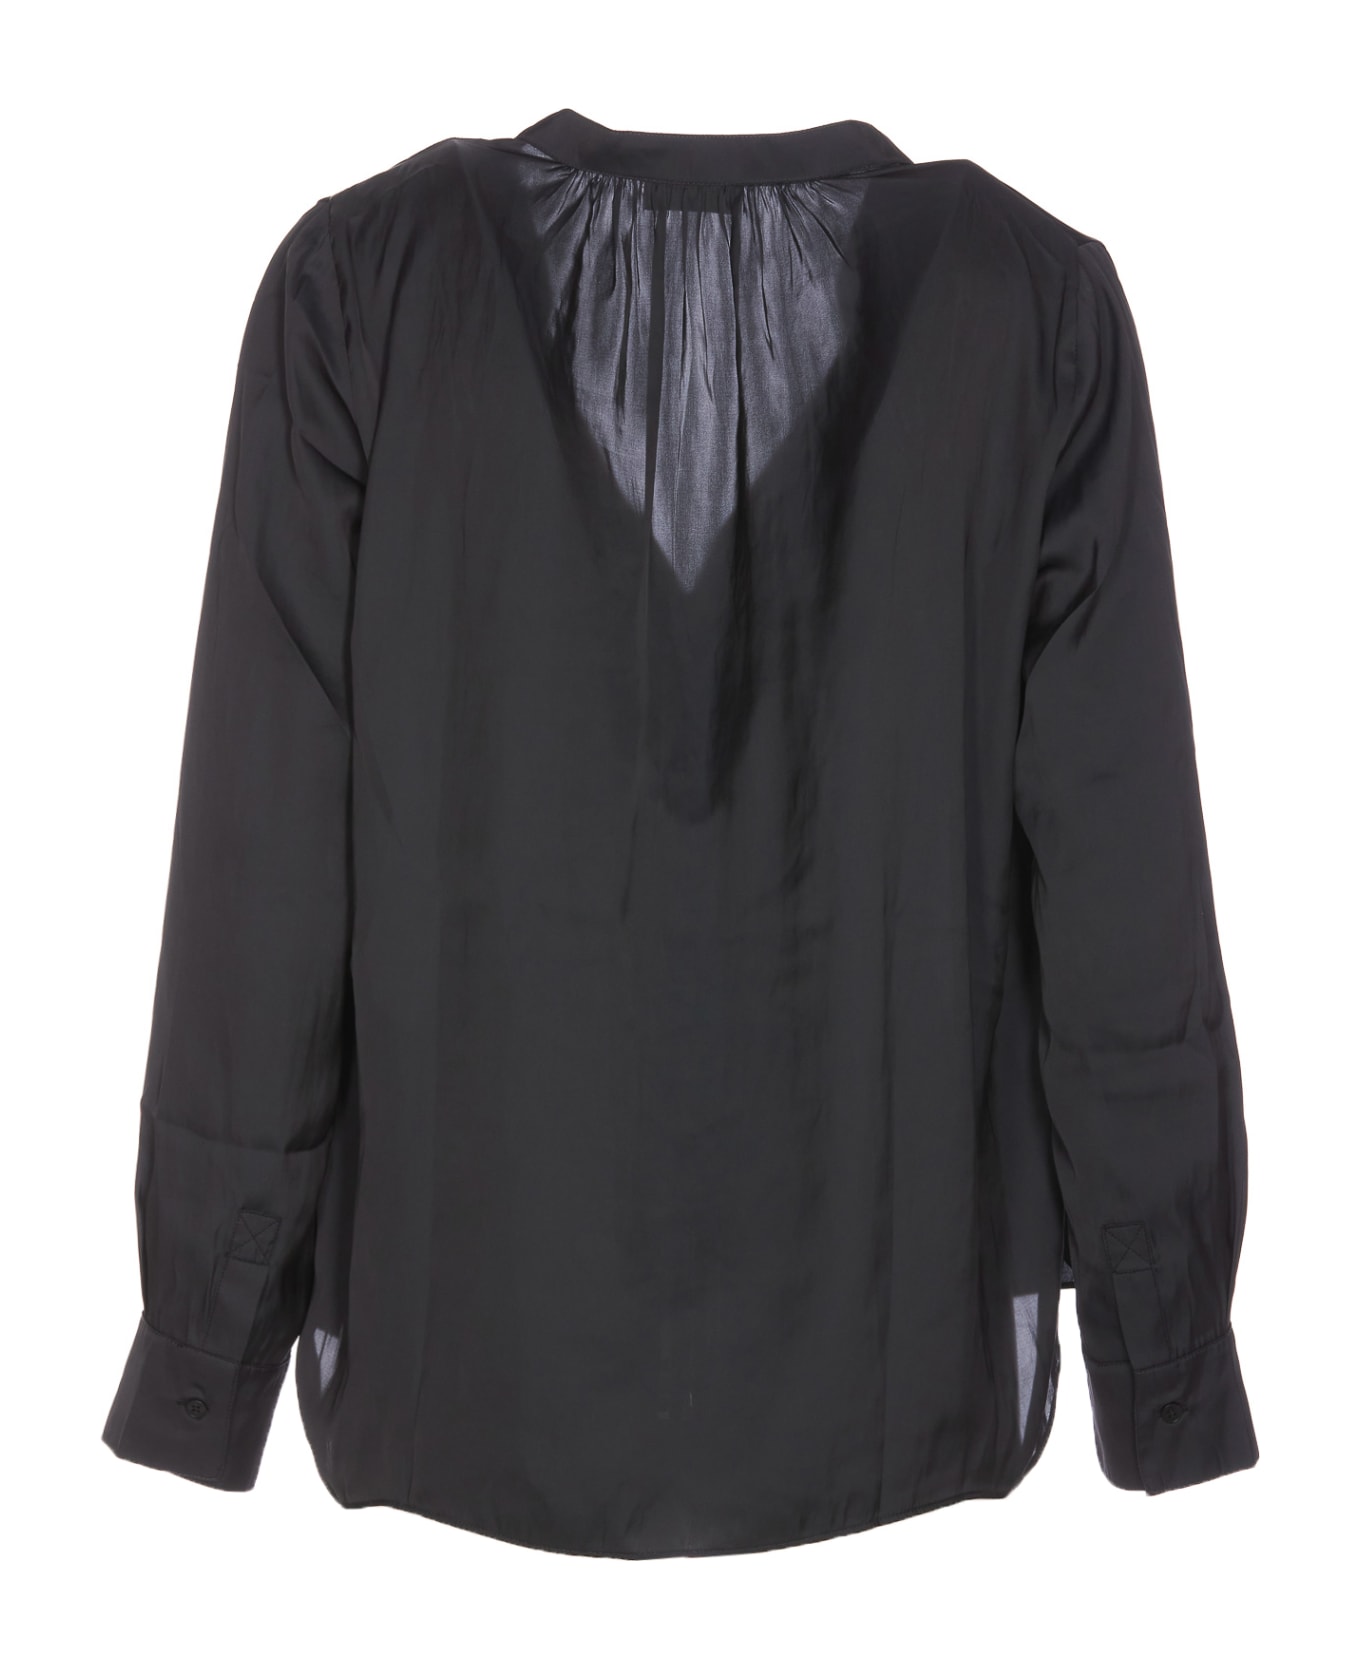 Zadig & Voltaire Tink Shirt - Black